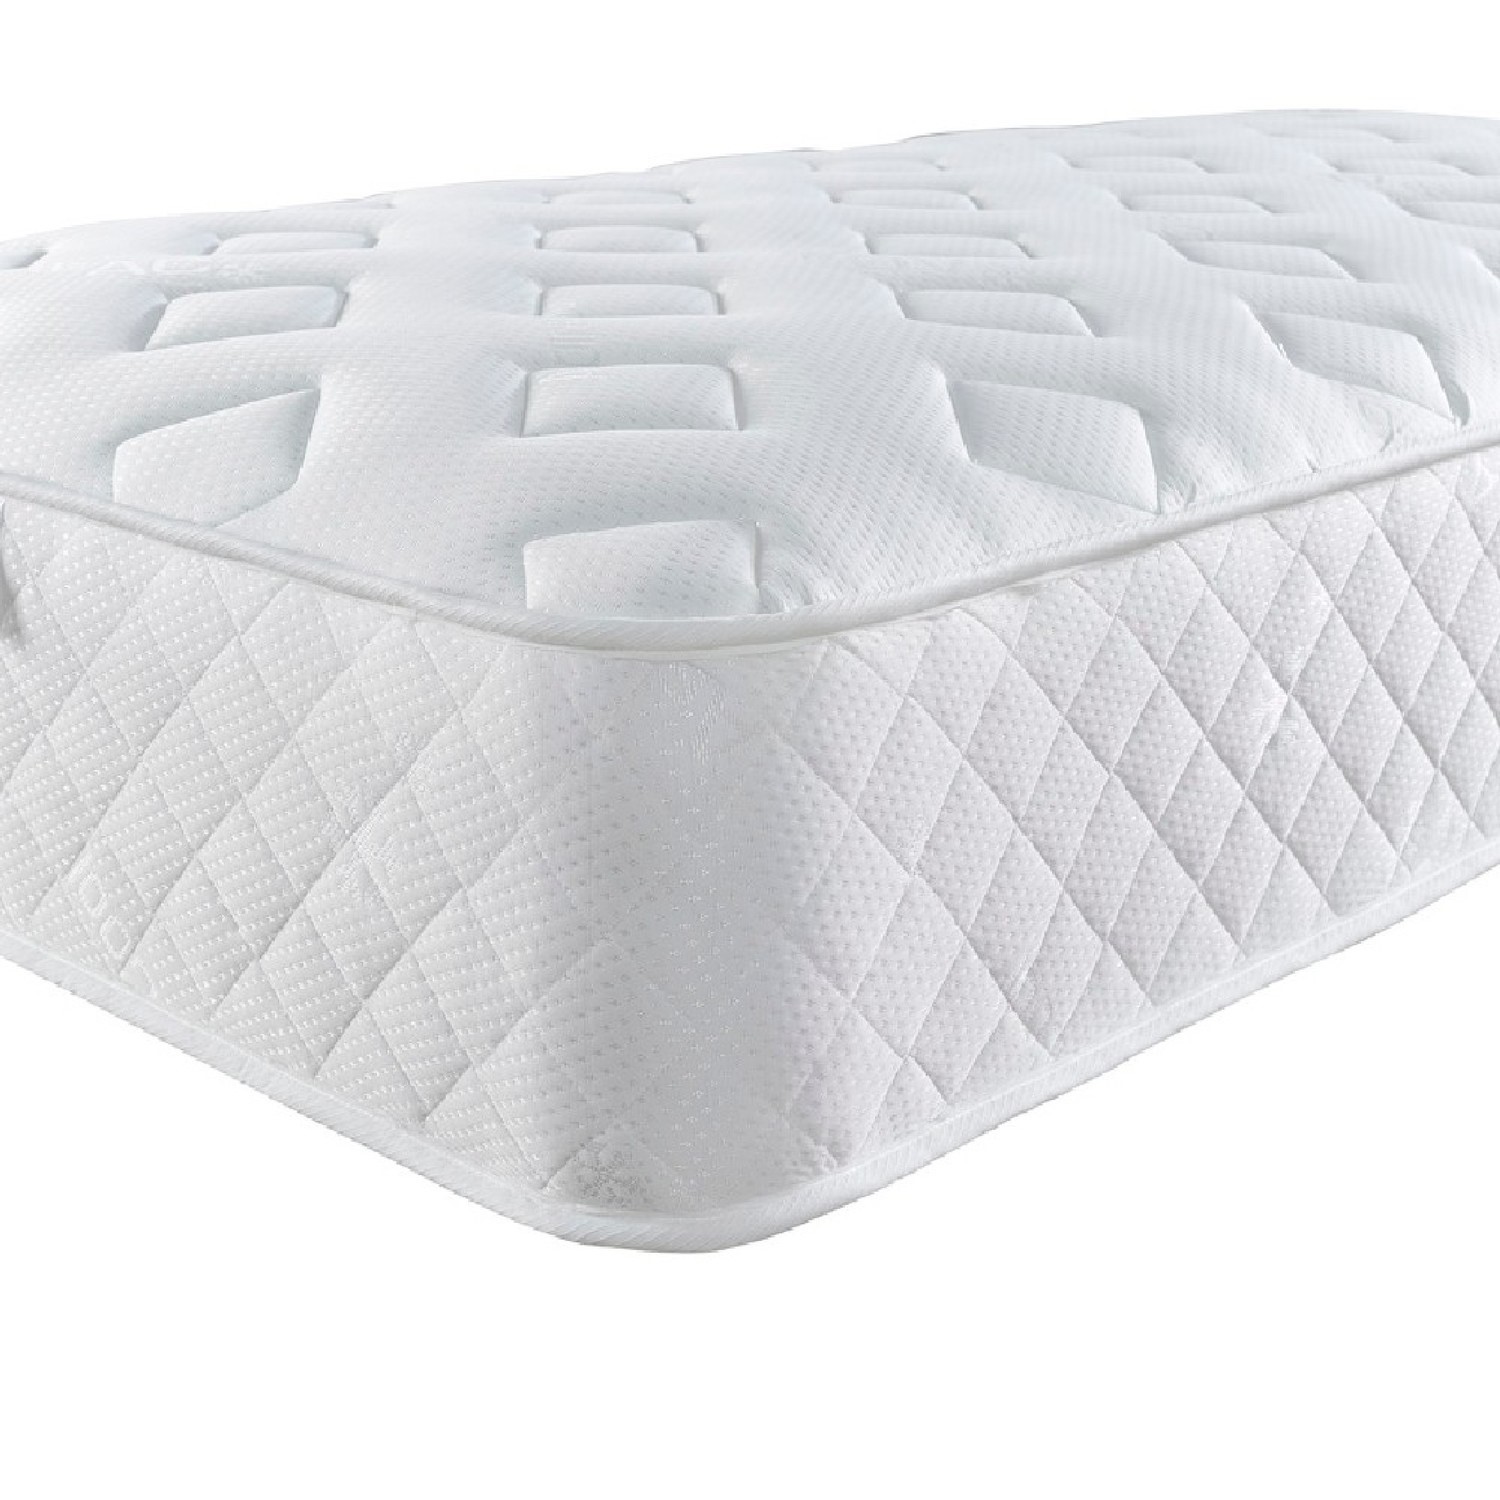 Aspire furniture comfort eco hybrid memory foam & spring mattress - king size